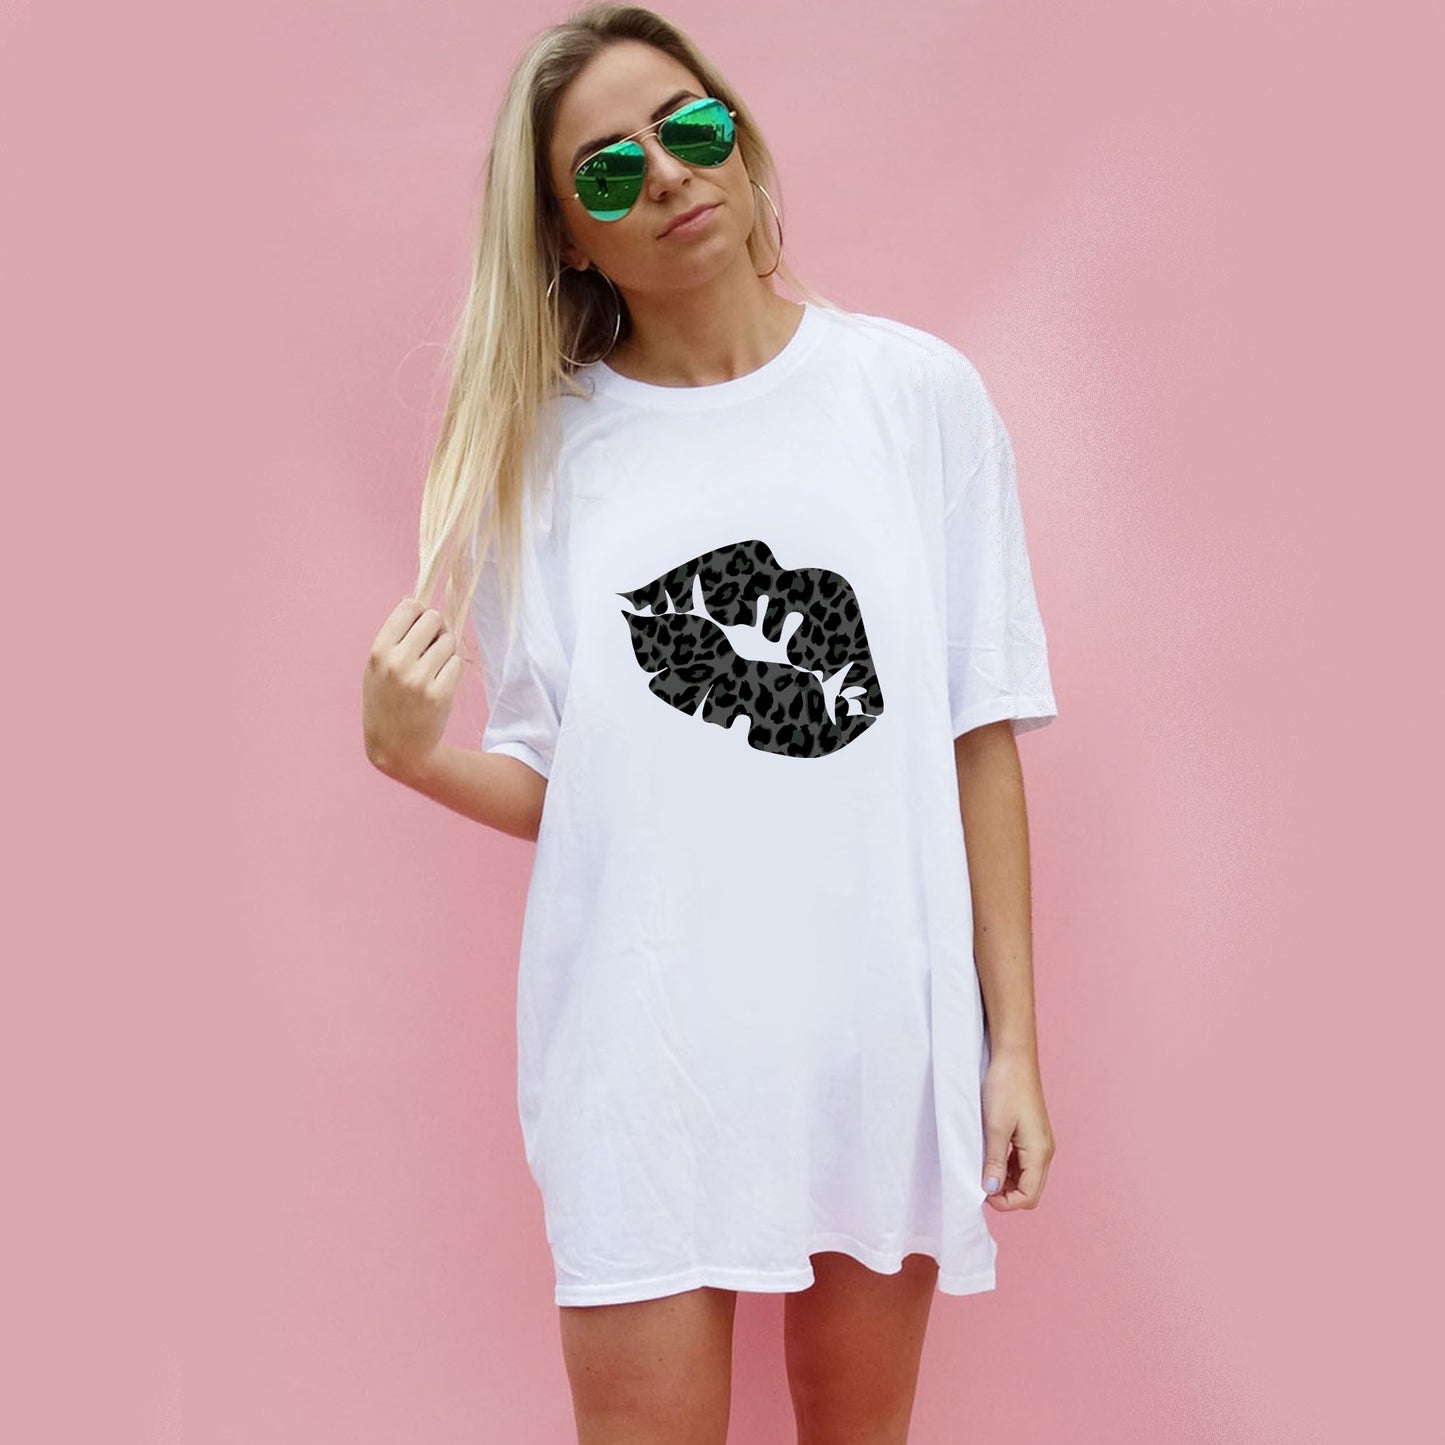 White Oversize T-shirt With Black Leopard Lip Print